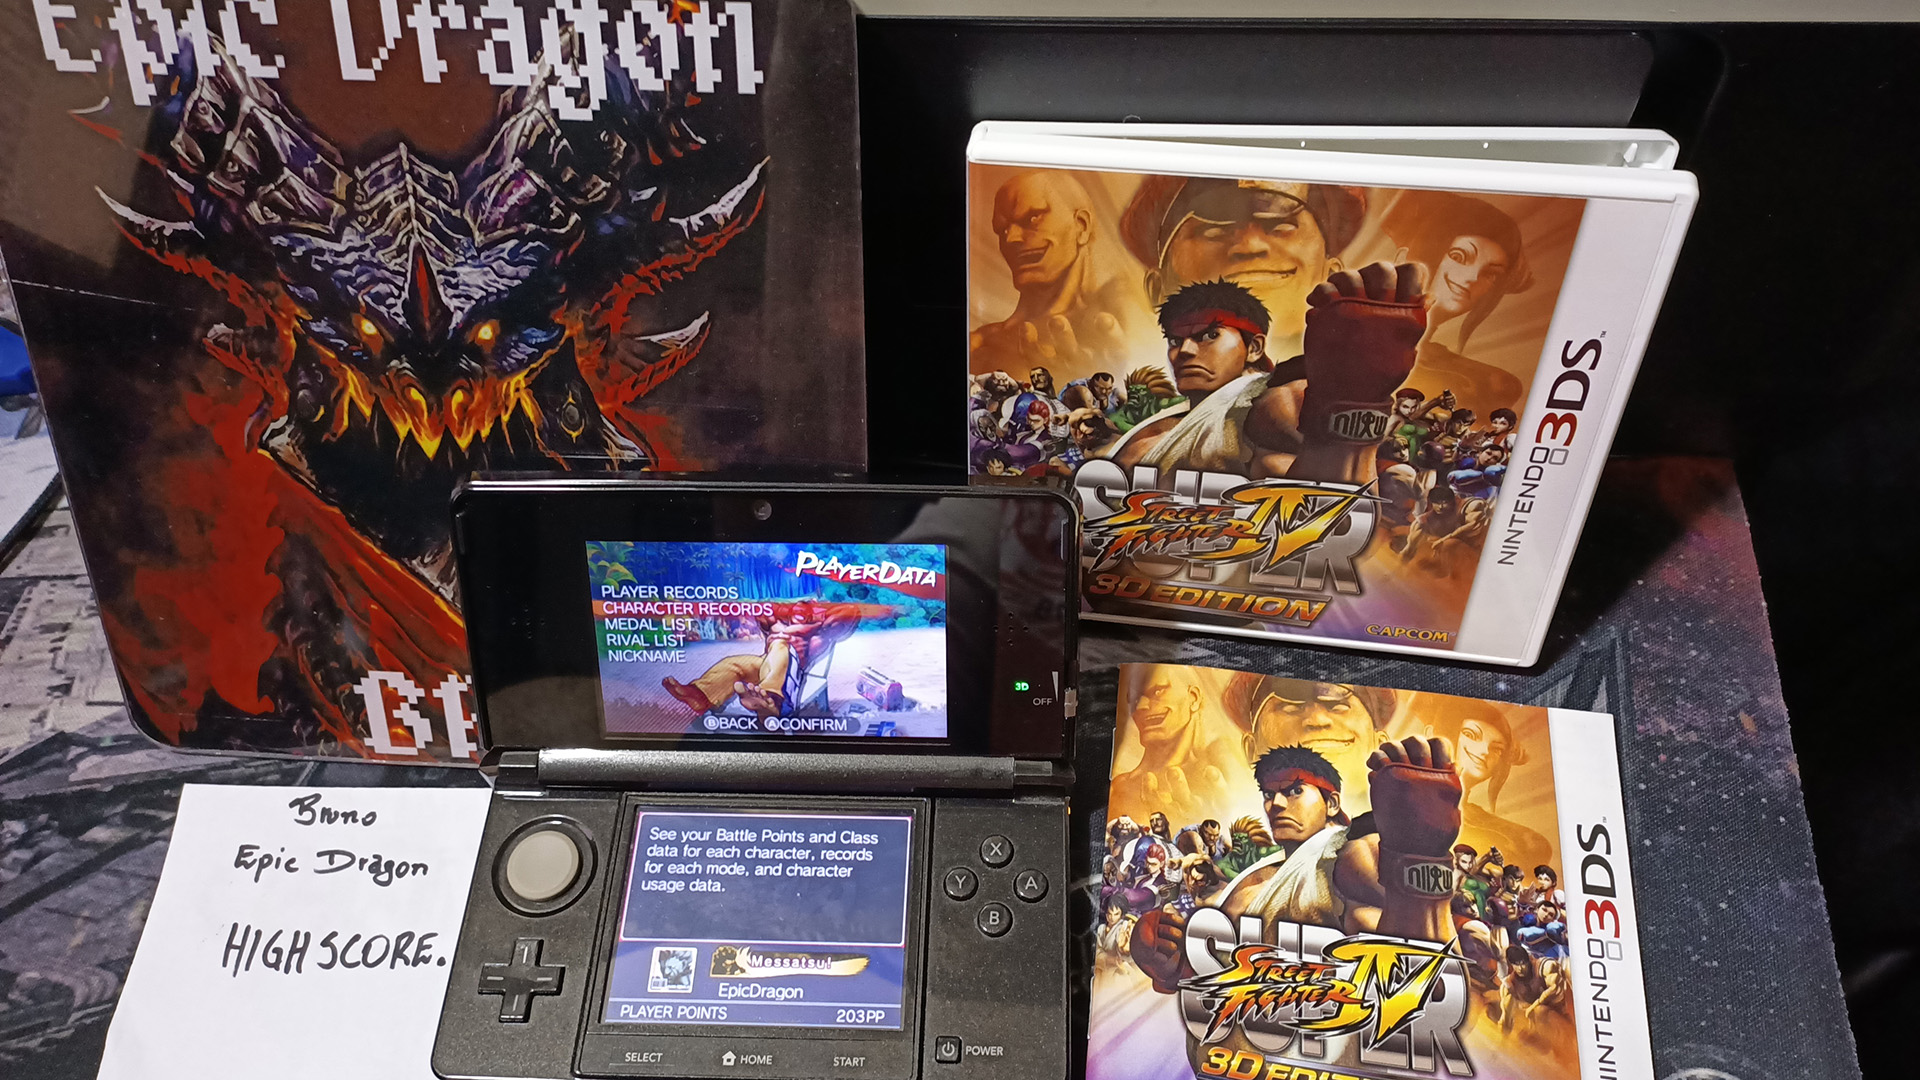 EpicDragon: Super Street Fighter IV 3D Edition: Arcade: Sakura (Nintendo 3DS) 132,700 points on 2022-08-21 14:12:37